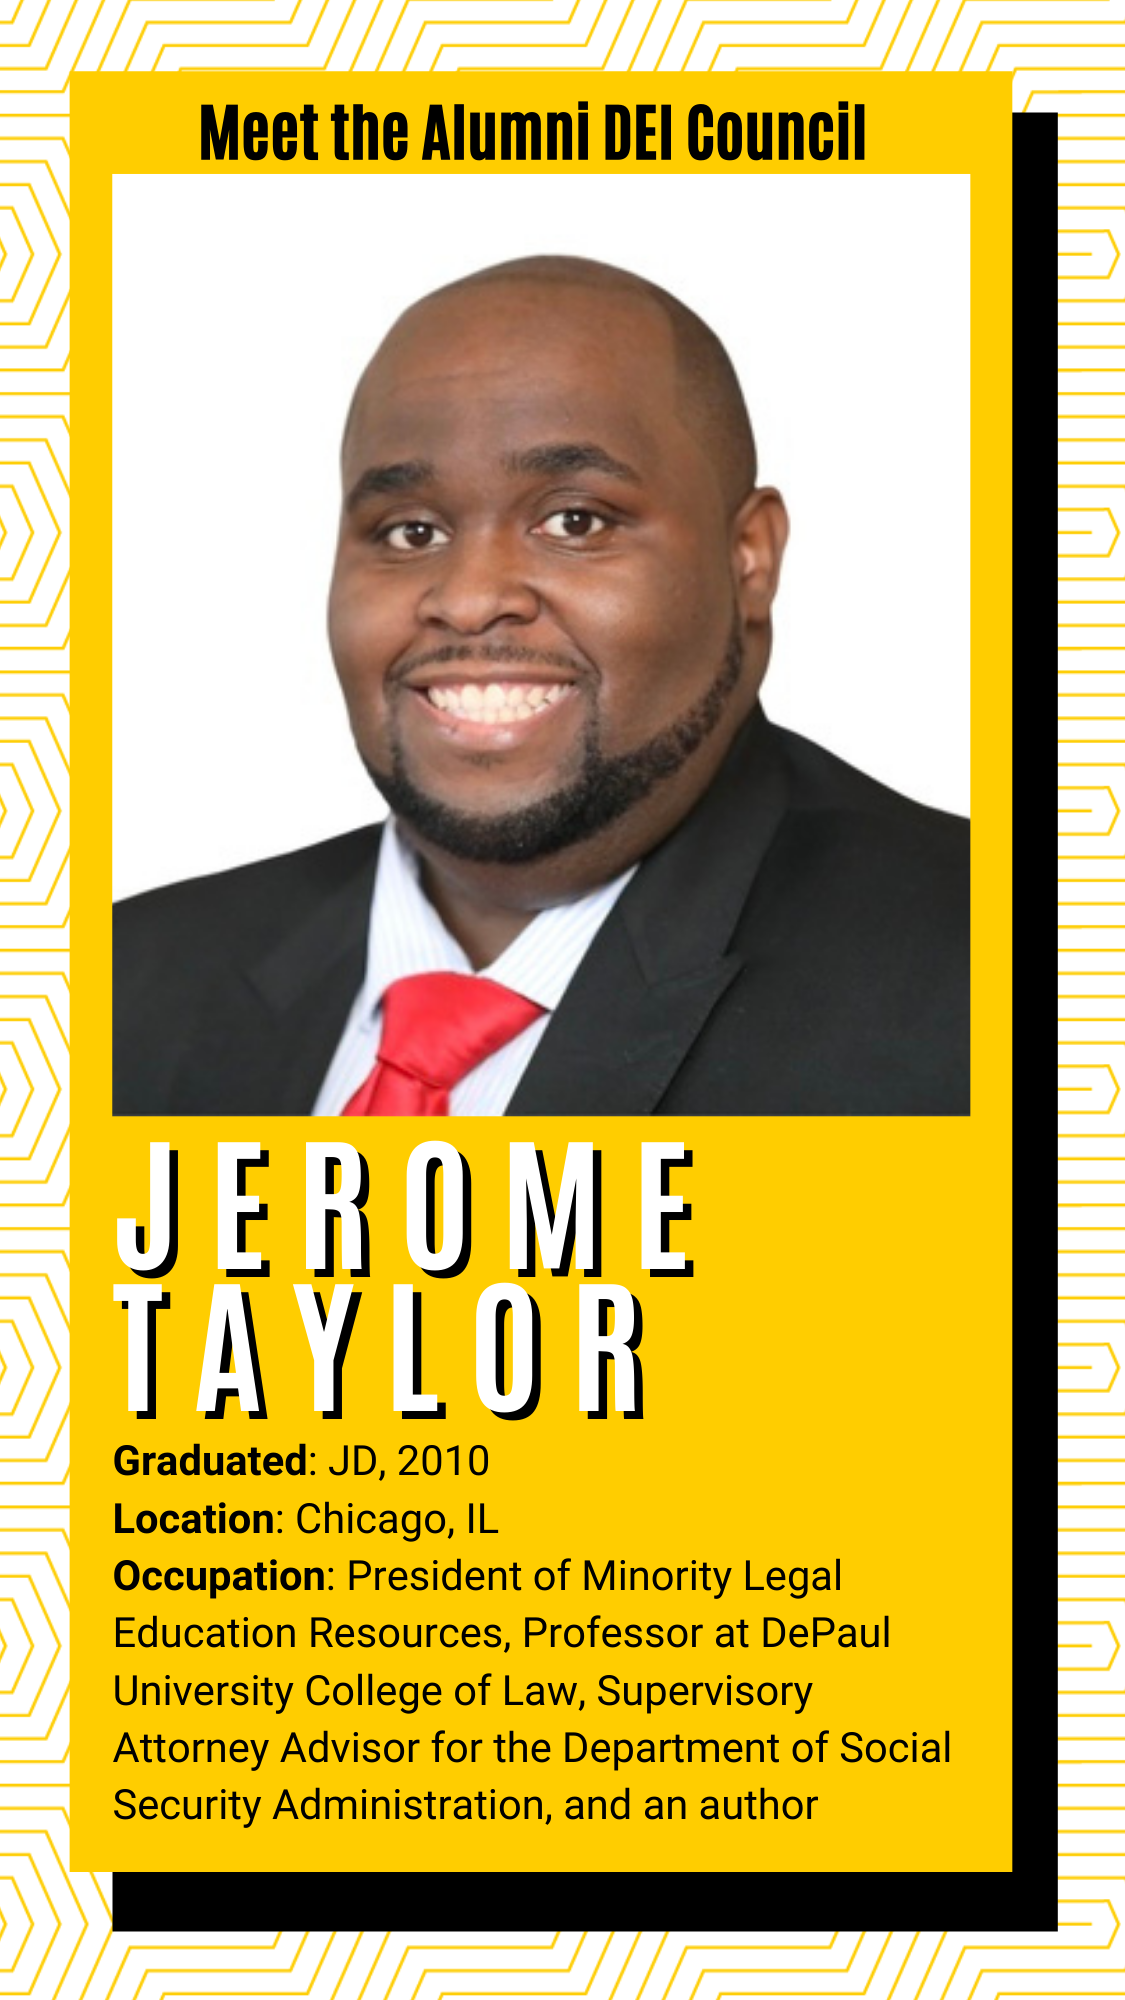 Meet the alumni DEI Council - Jerome Taylor